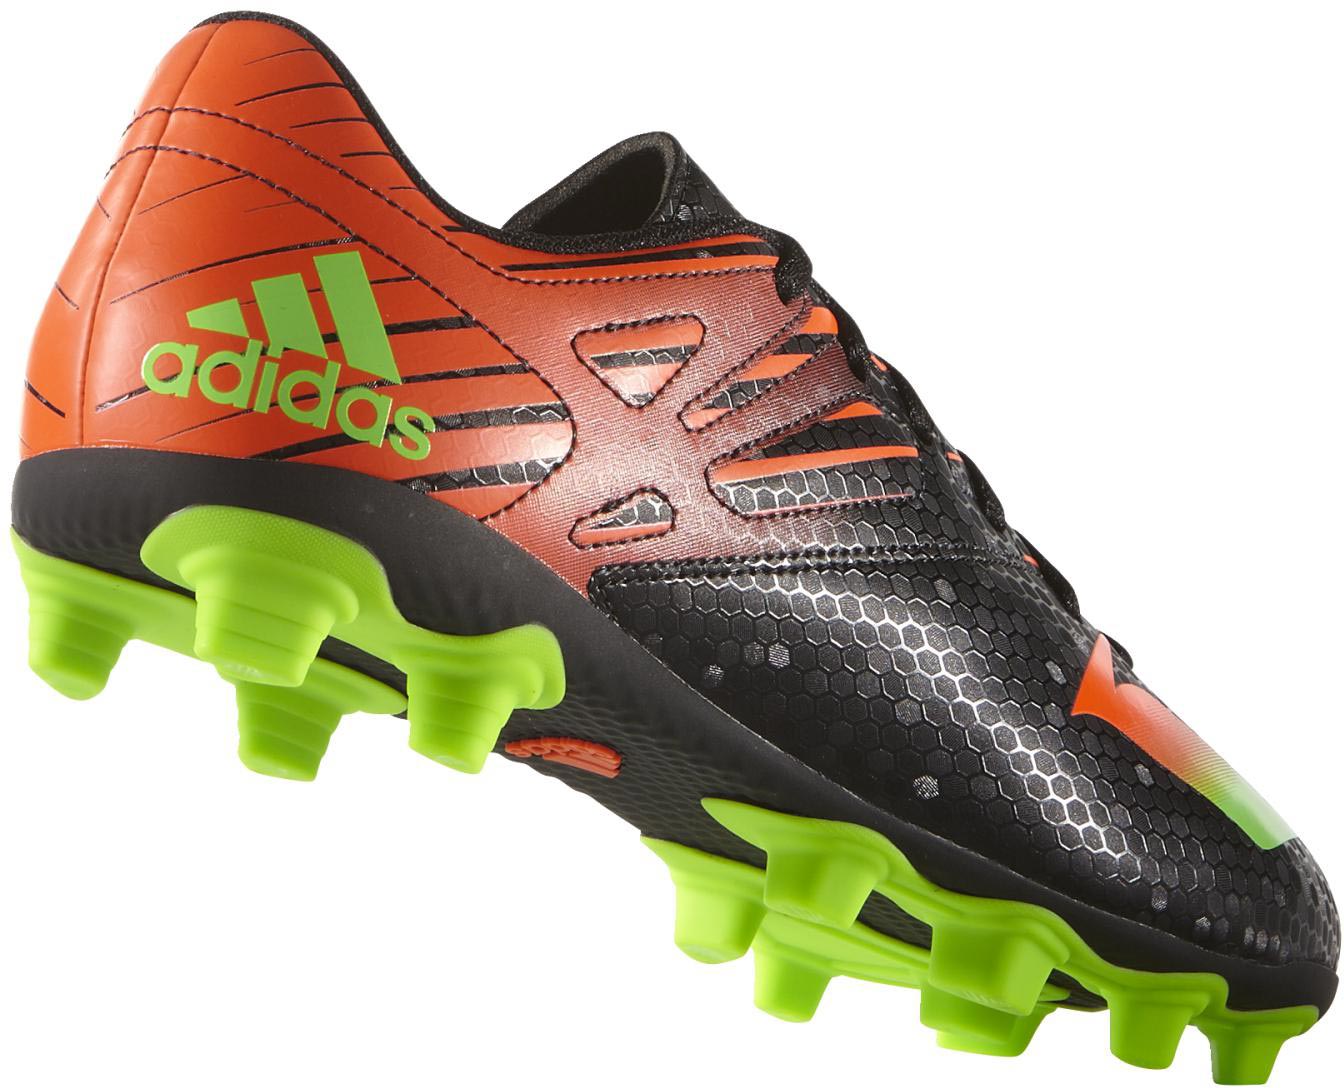 Men’s football boots - adidas